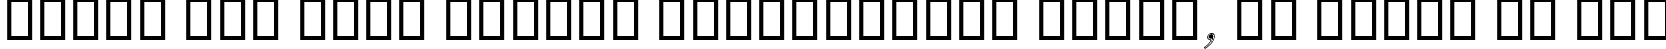 Пример написания шрифтом B Niki Border Italic текста на русском